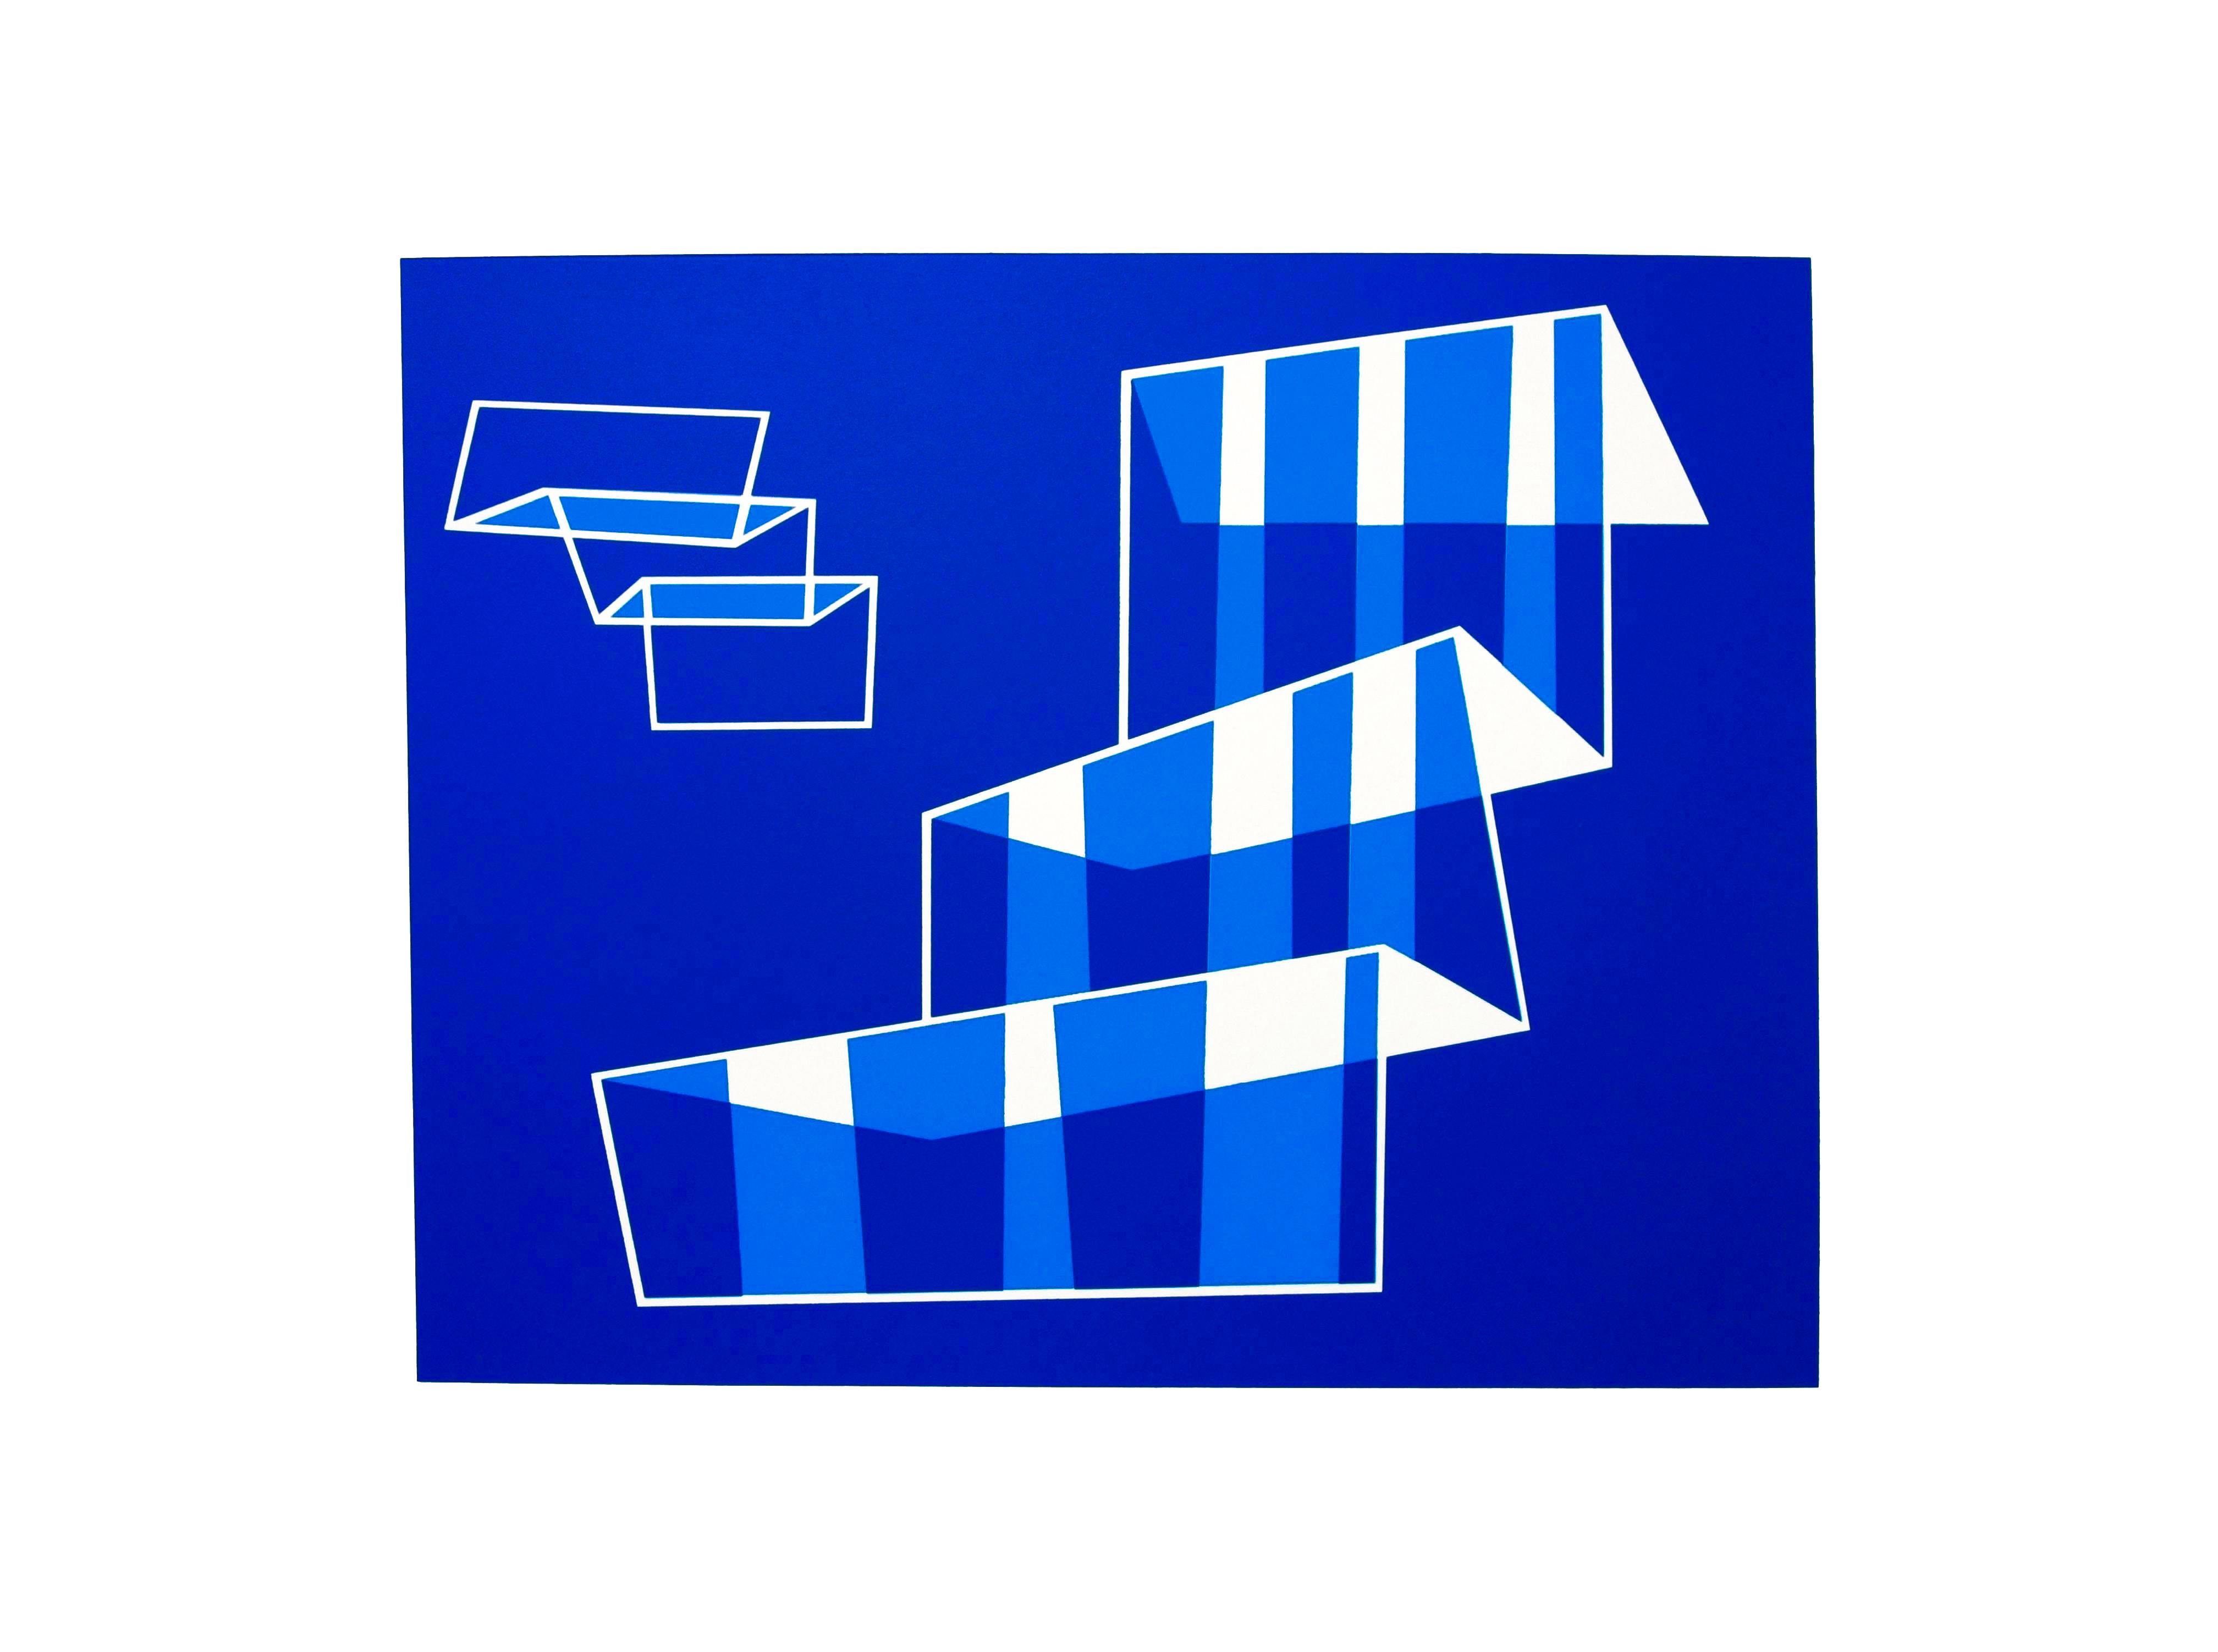 Josef Albers Abstract Print - Formulation : Articulation Portfolio I Folder 1 (B)